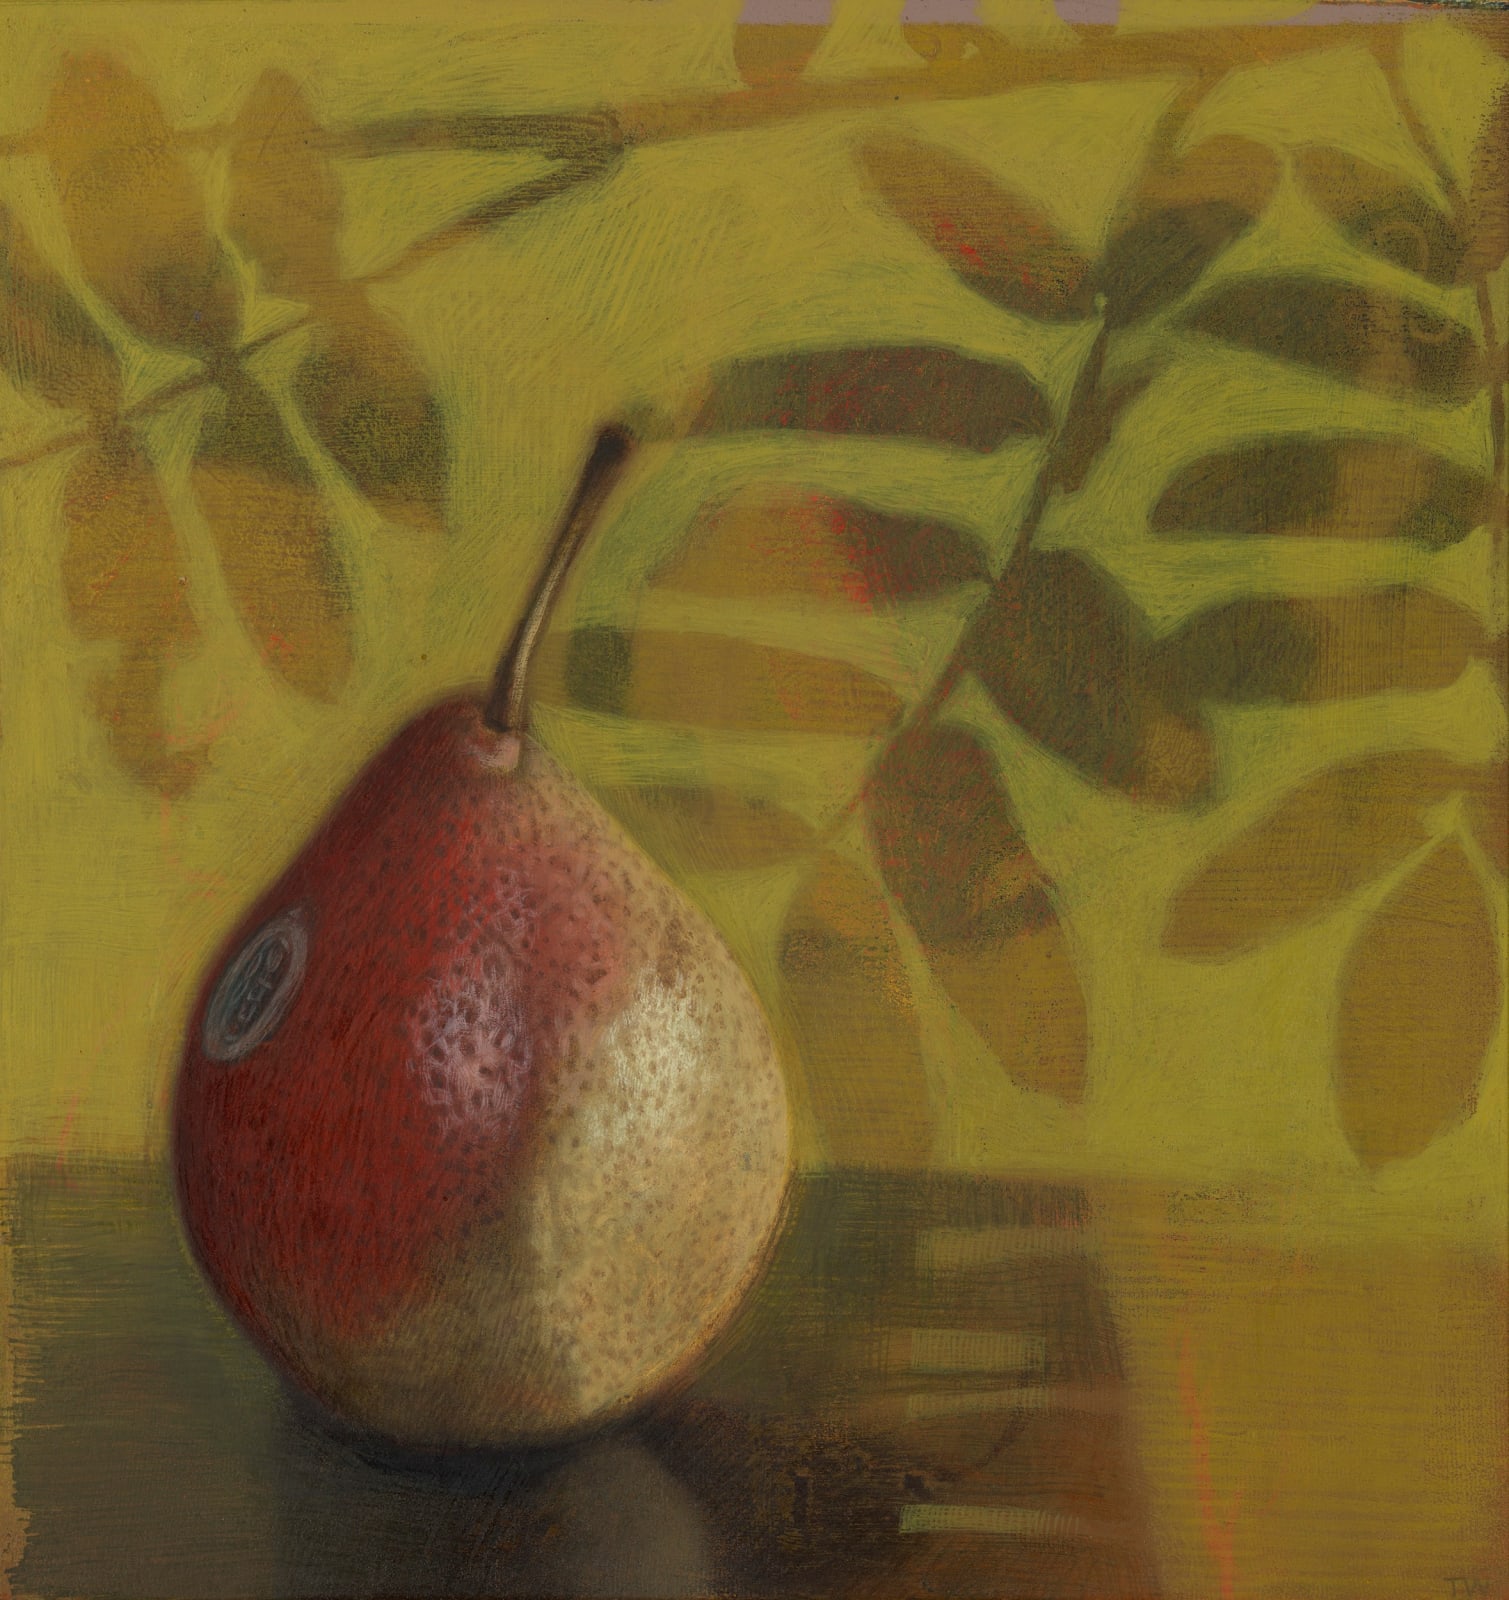 Tom Wood, French Pear, 2003